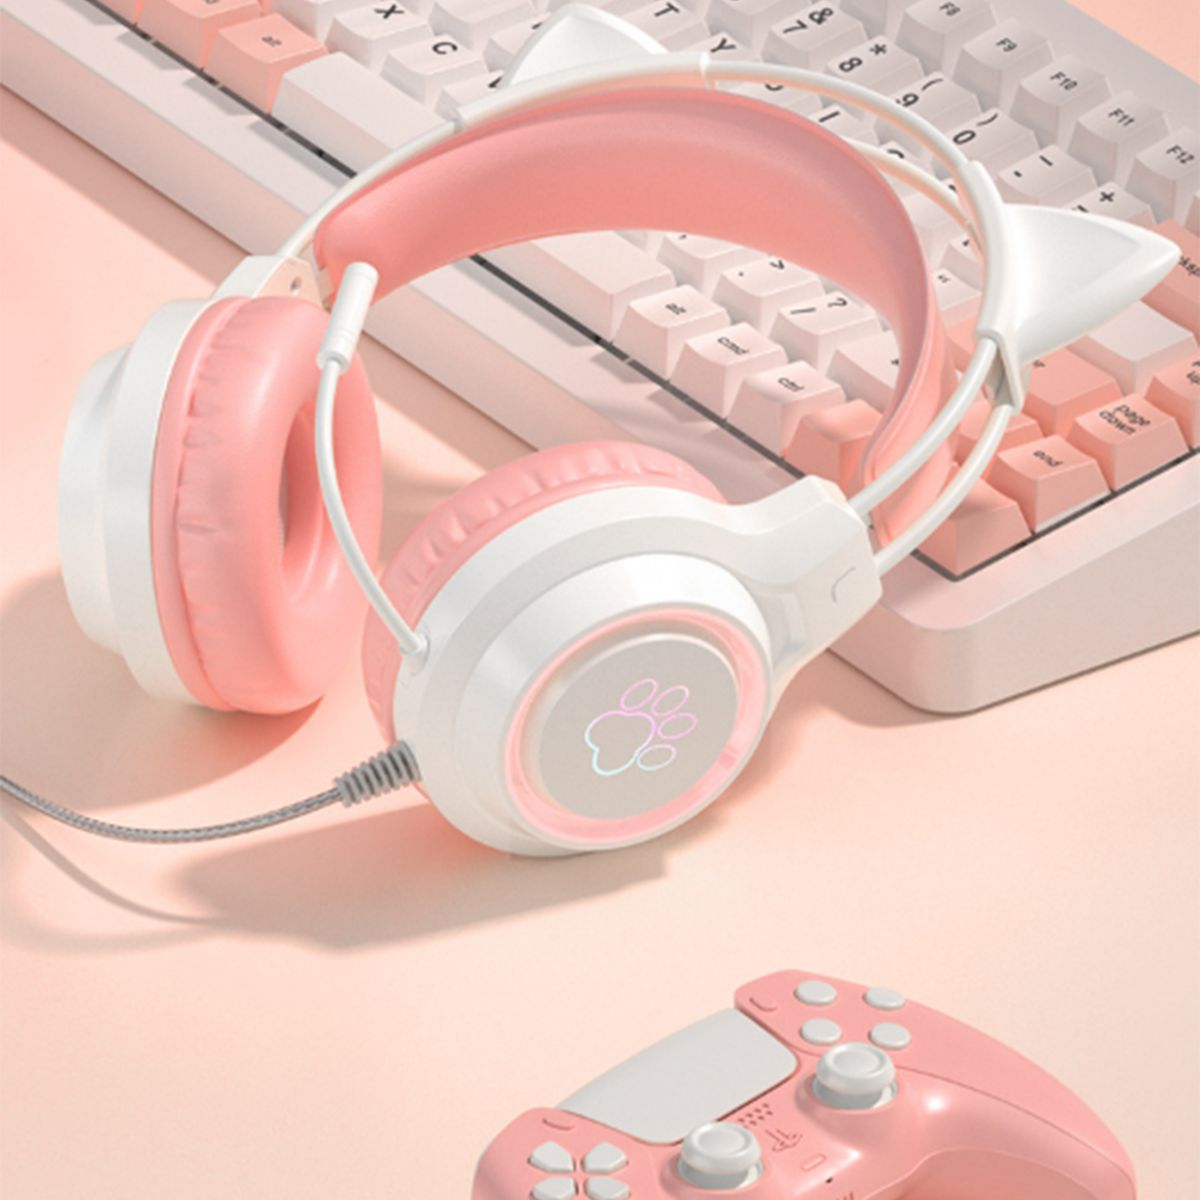 KINSI Headset,Gaming-Headset mit Over-Ear-Kopfhörer, Katzenohren,Geräuschunterdrückung Kopfhörer rosa Over-ear